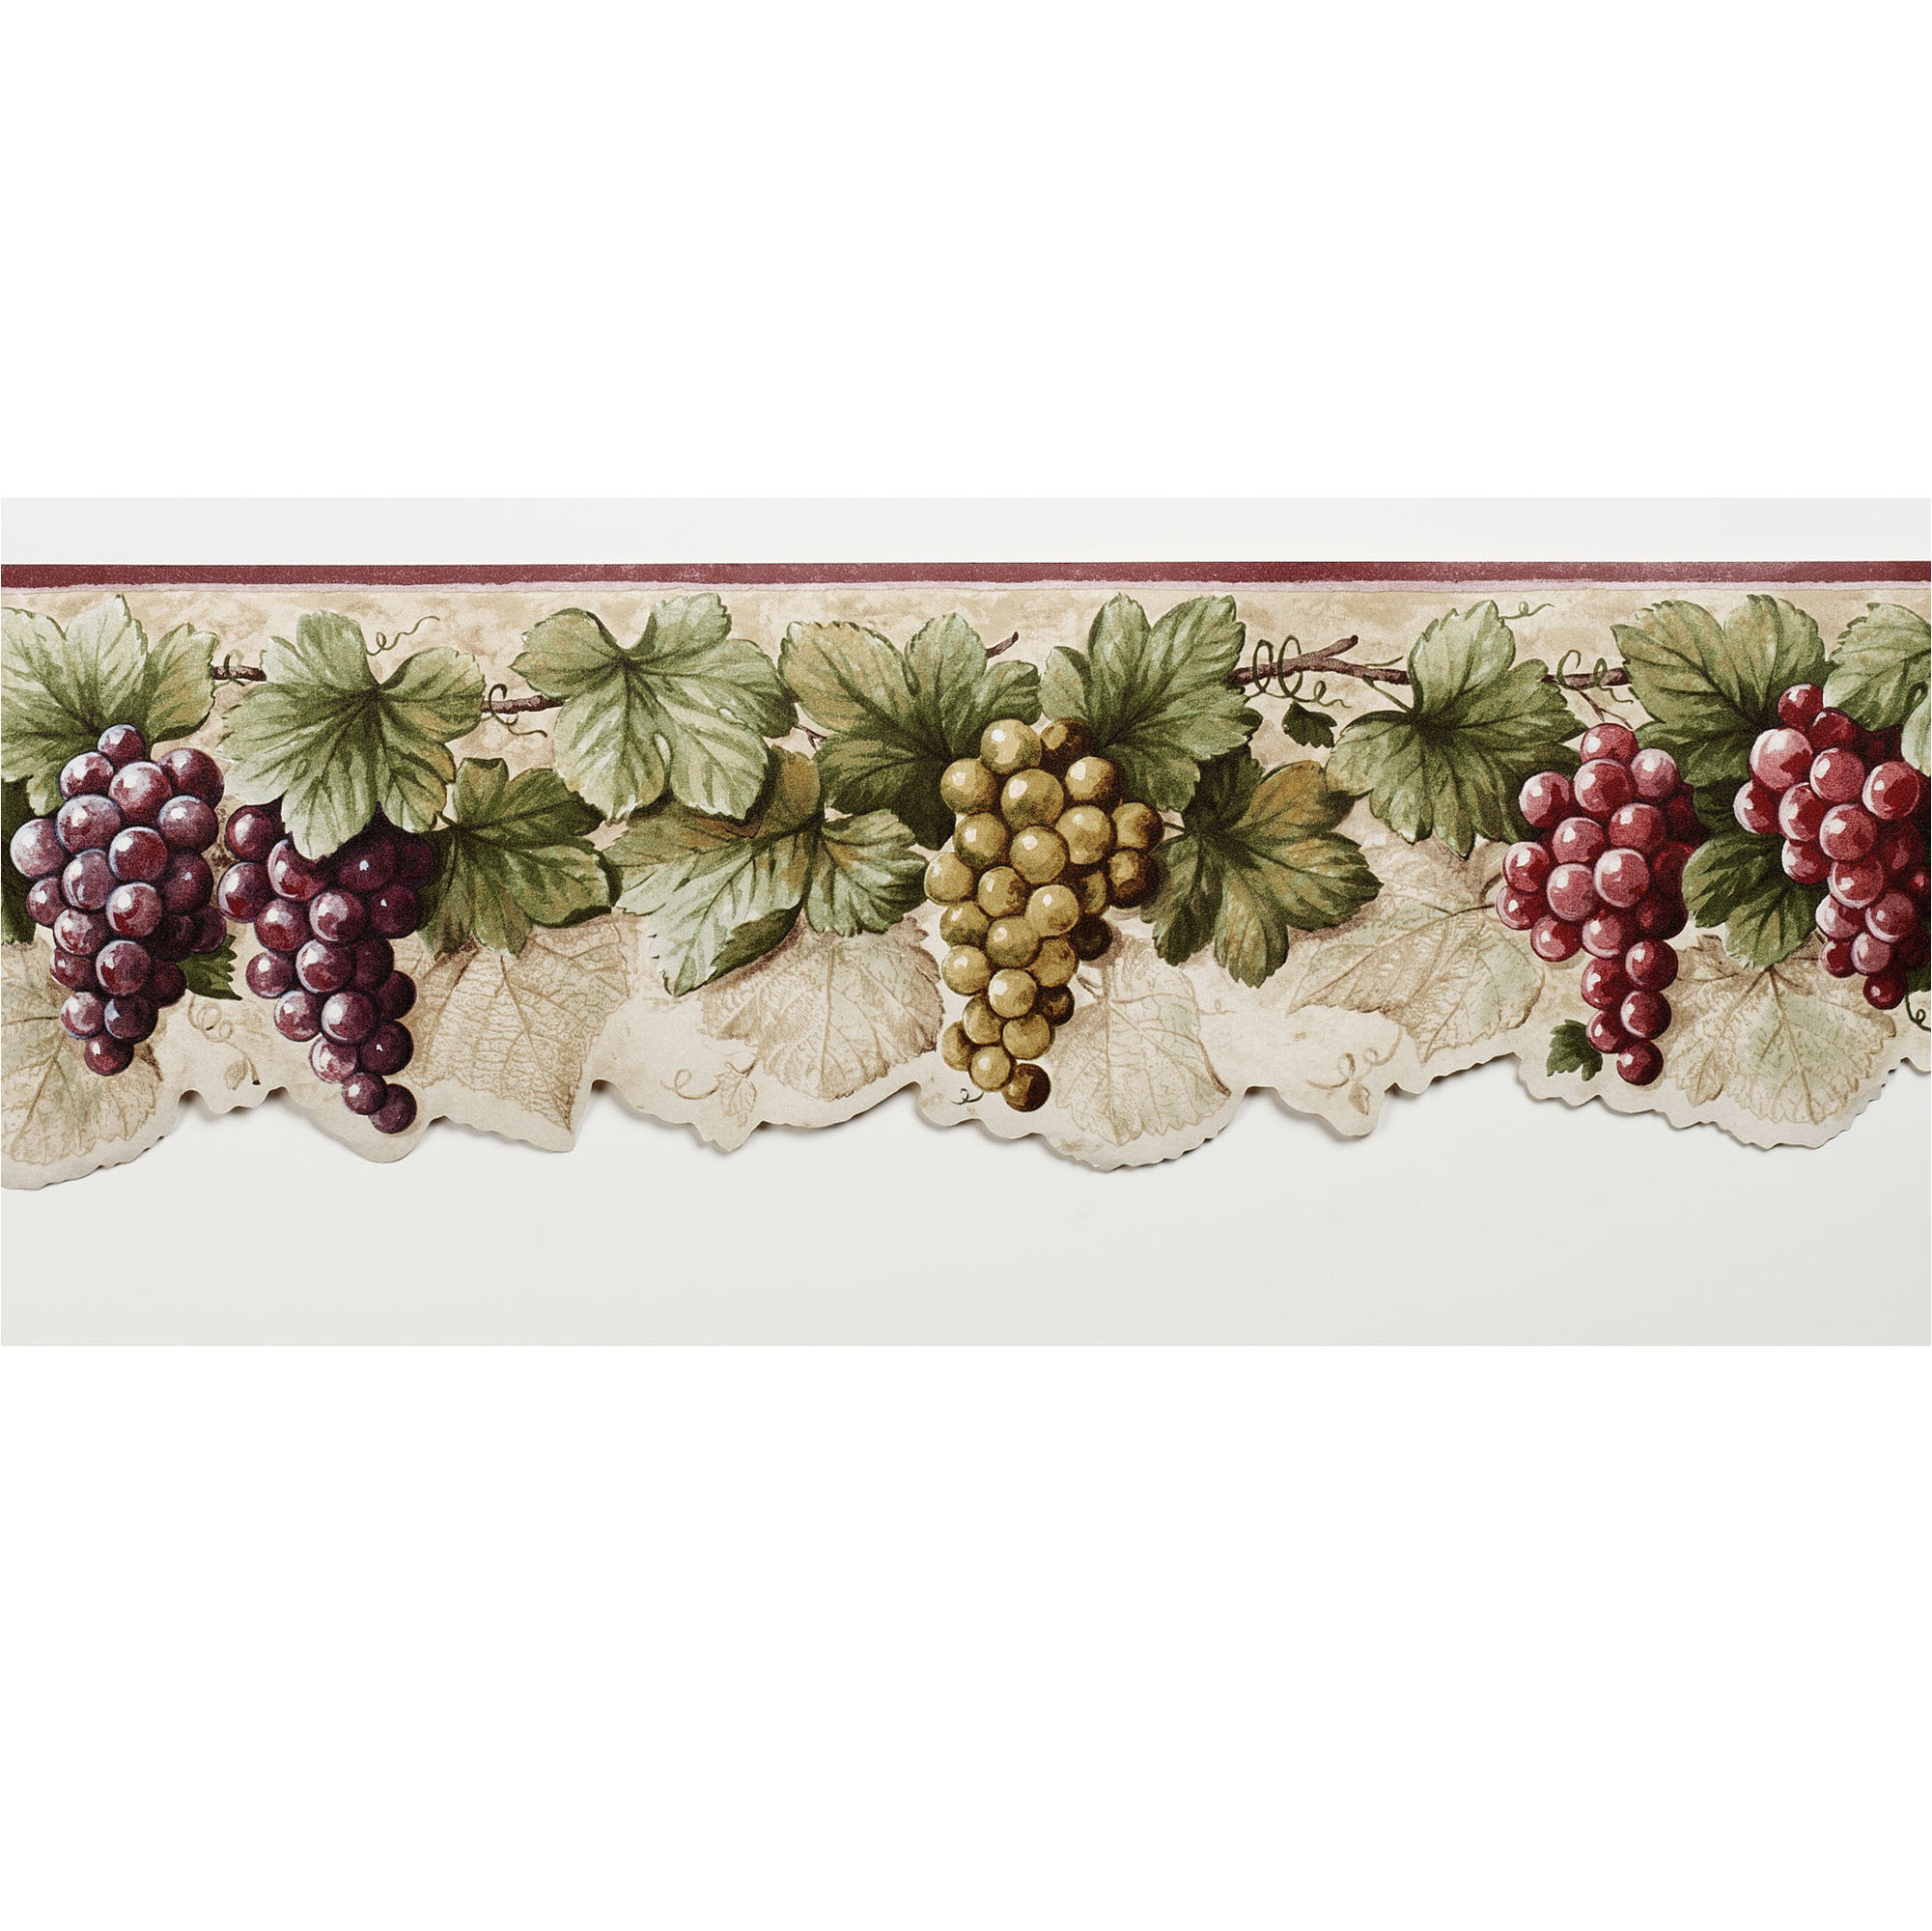 Wallpaper Border Title Home Harvest Time Grapes